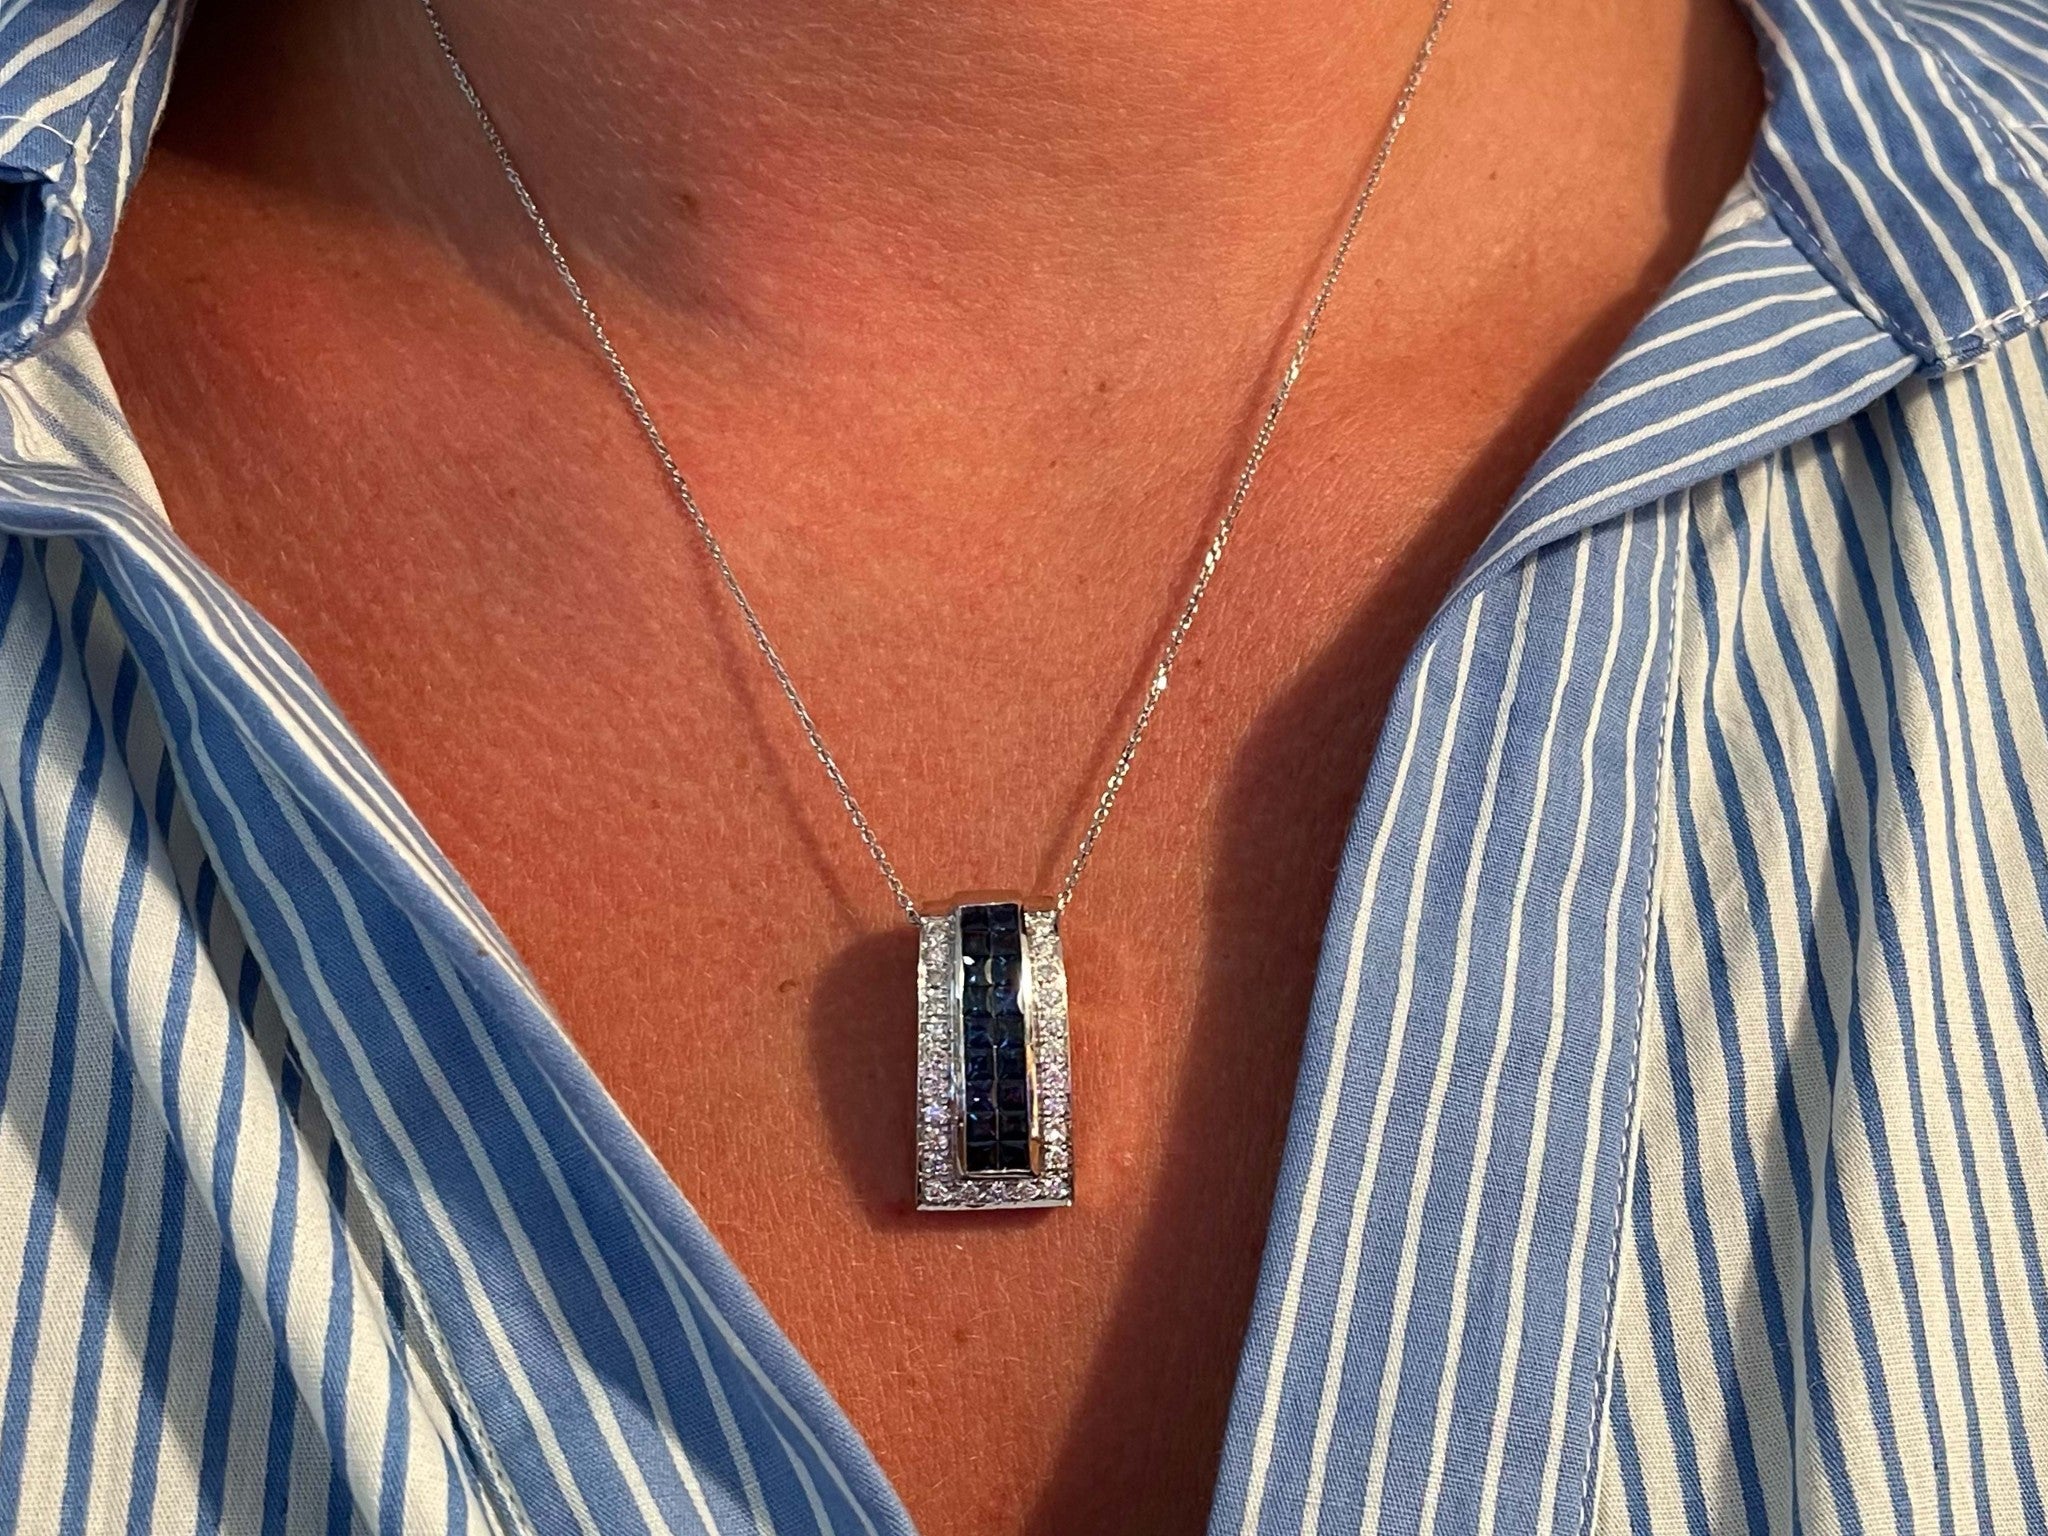 Diamond Sapphire Rectangular Pendant and Chain in 14k White Gold